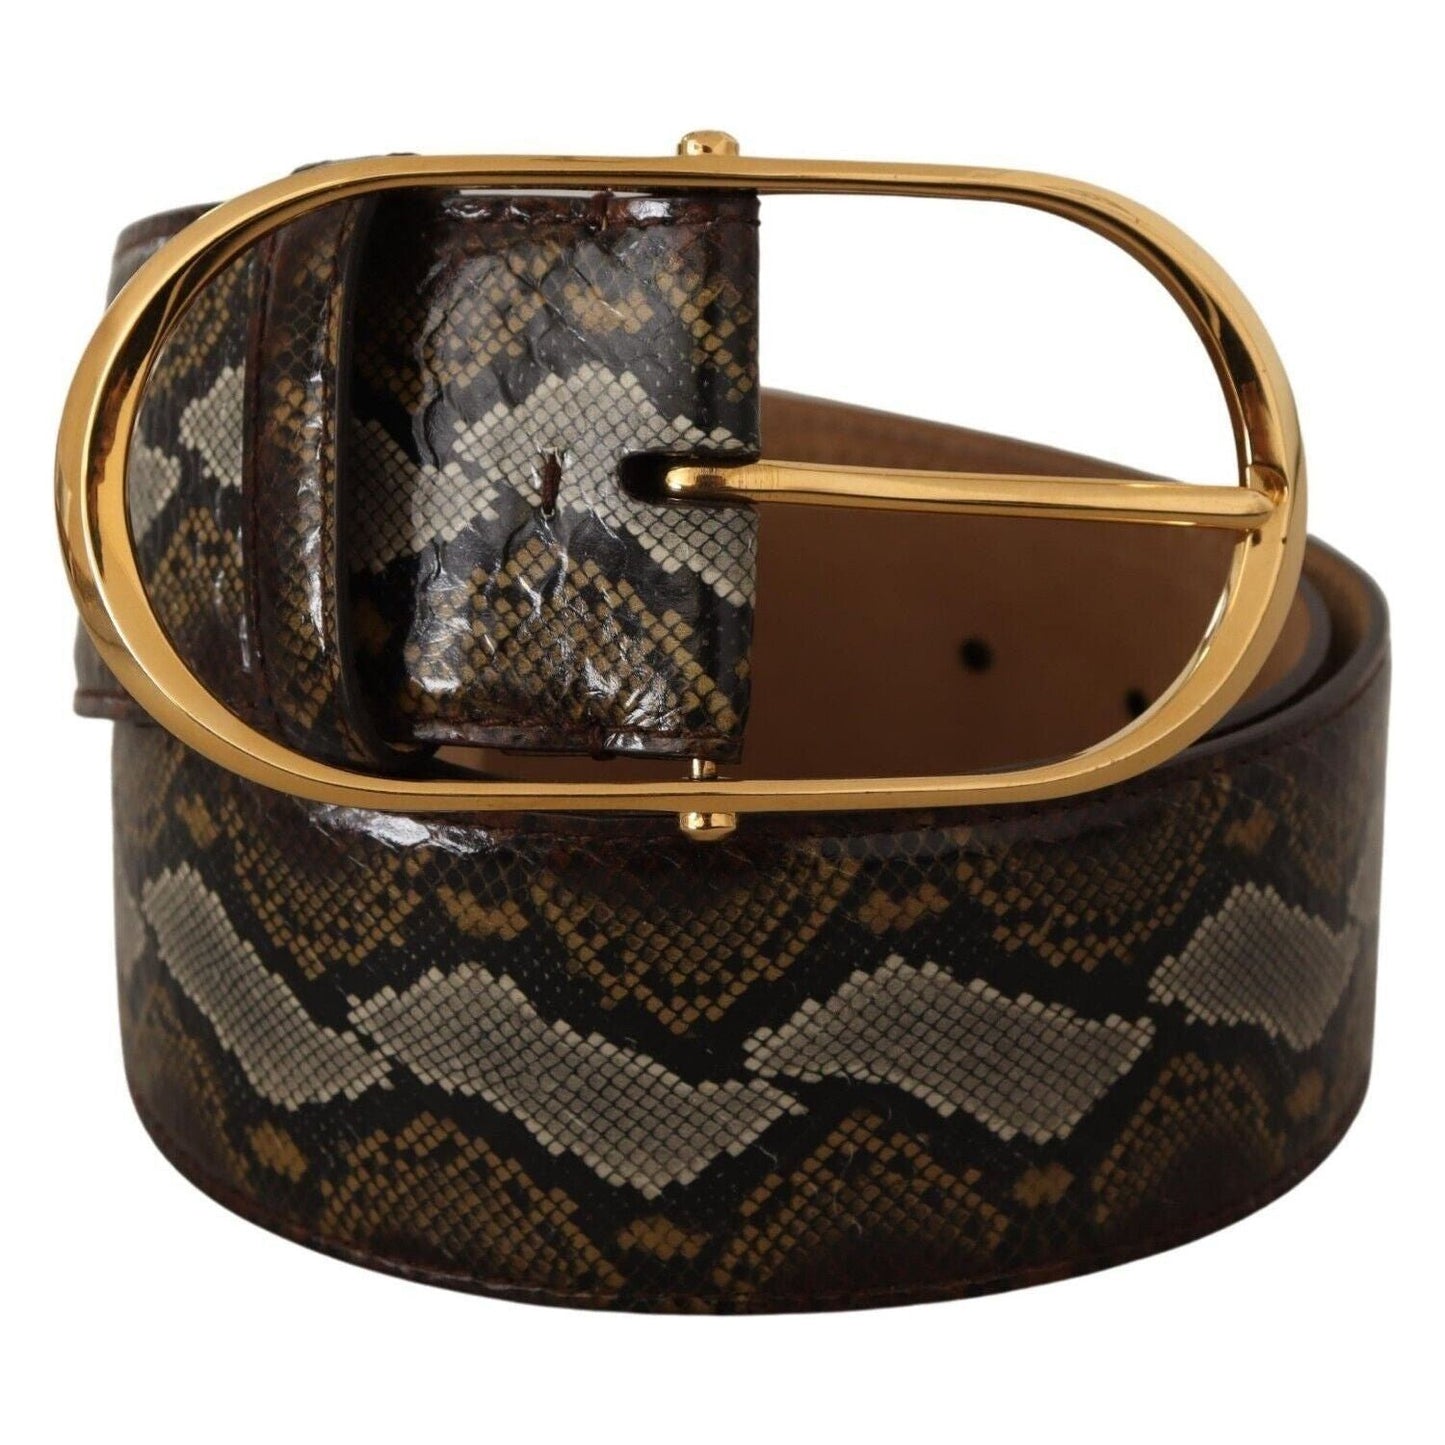 Dolce & Gabbana Elegant Gold Oval Buckle Leather Belt brown-python-leather-gold-oval-buckle-belt WOMAN BELTS s-l1600-1-277-8a85a034-74b.jpg